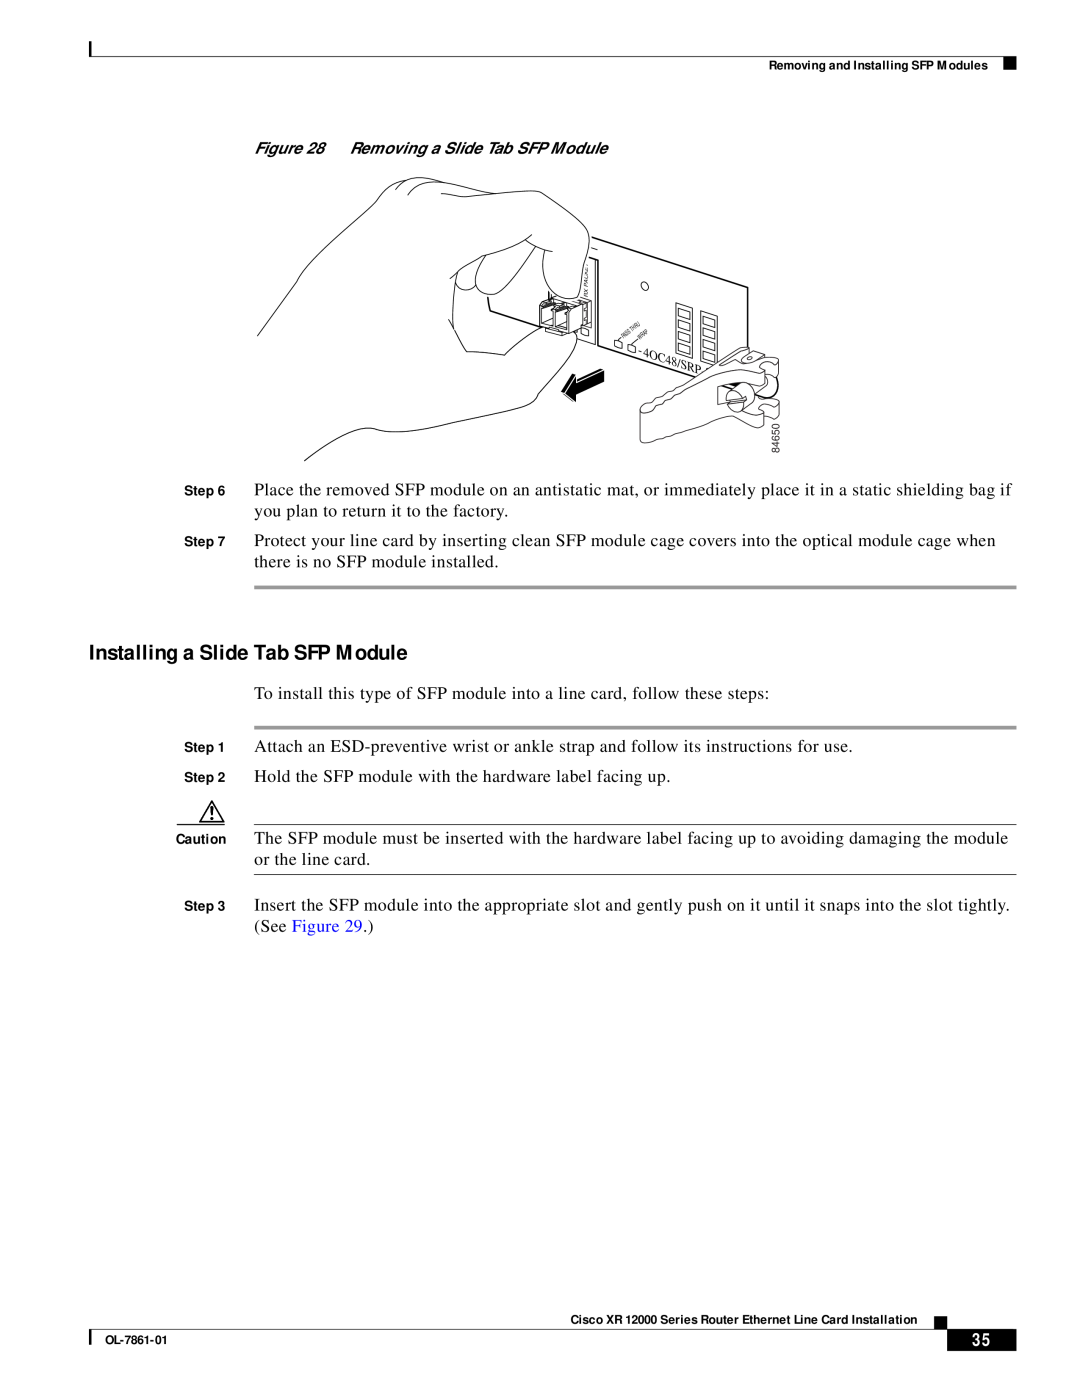 Cisco Systems OL-7861-01 manual Installing a Slide Tab SFP Module, Removing a Slide Tab SFP Module 